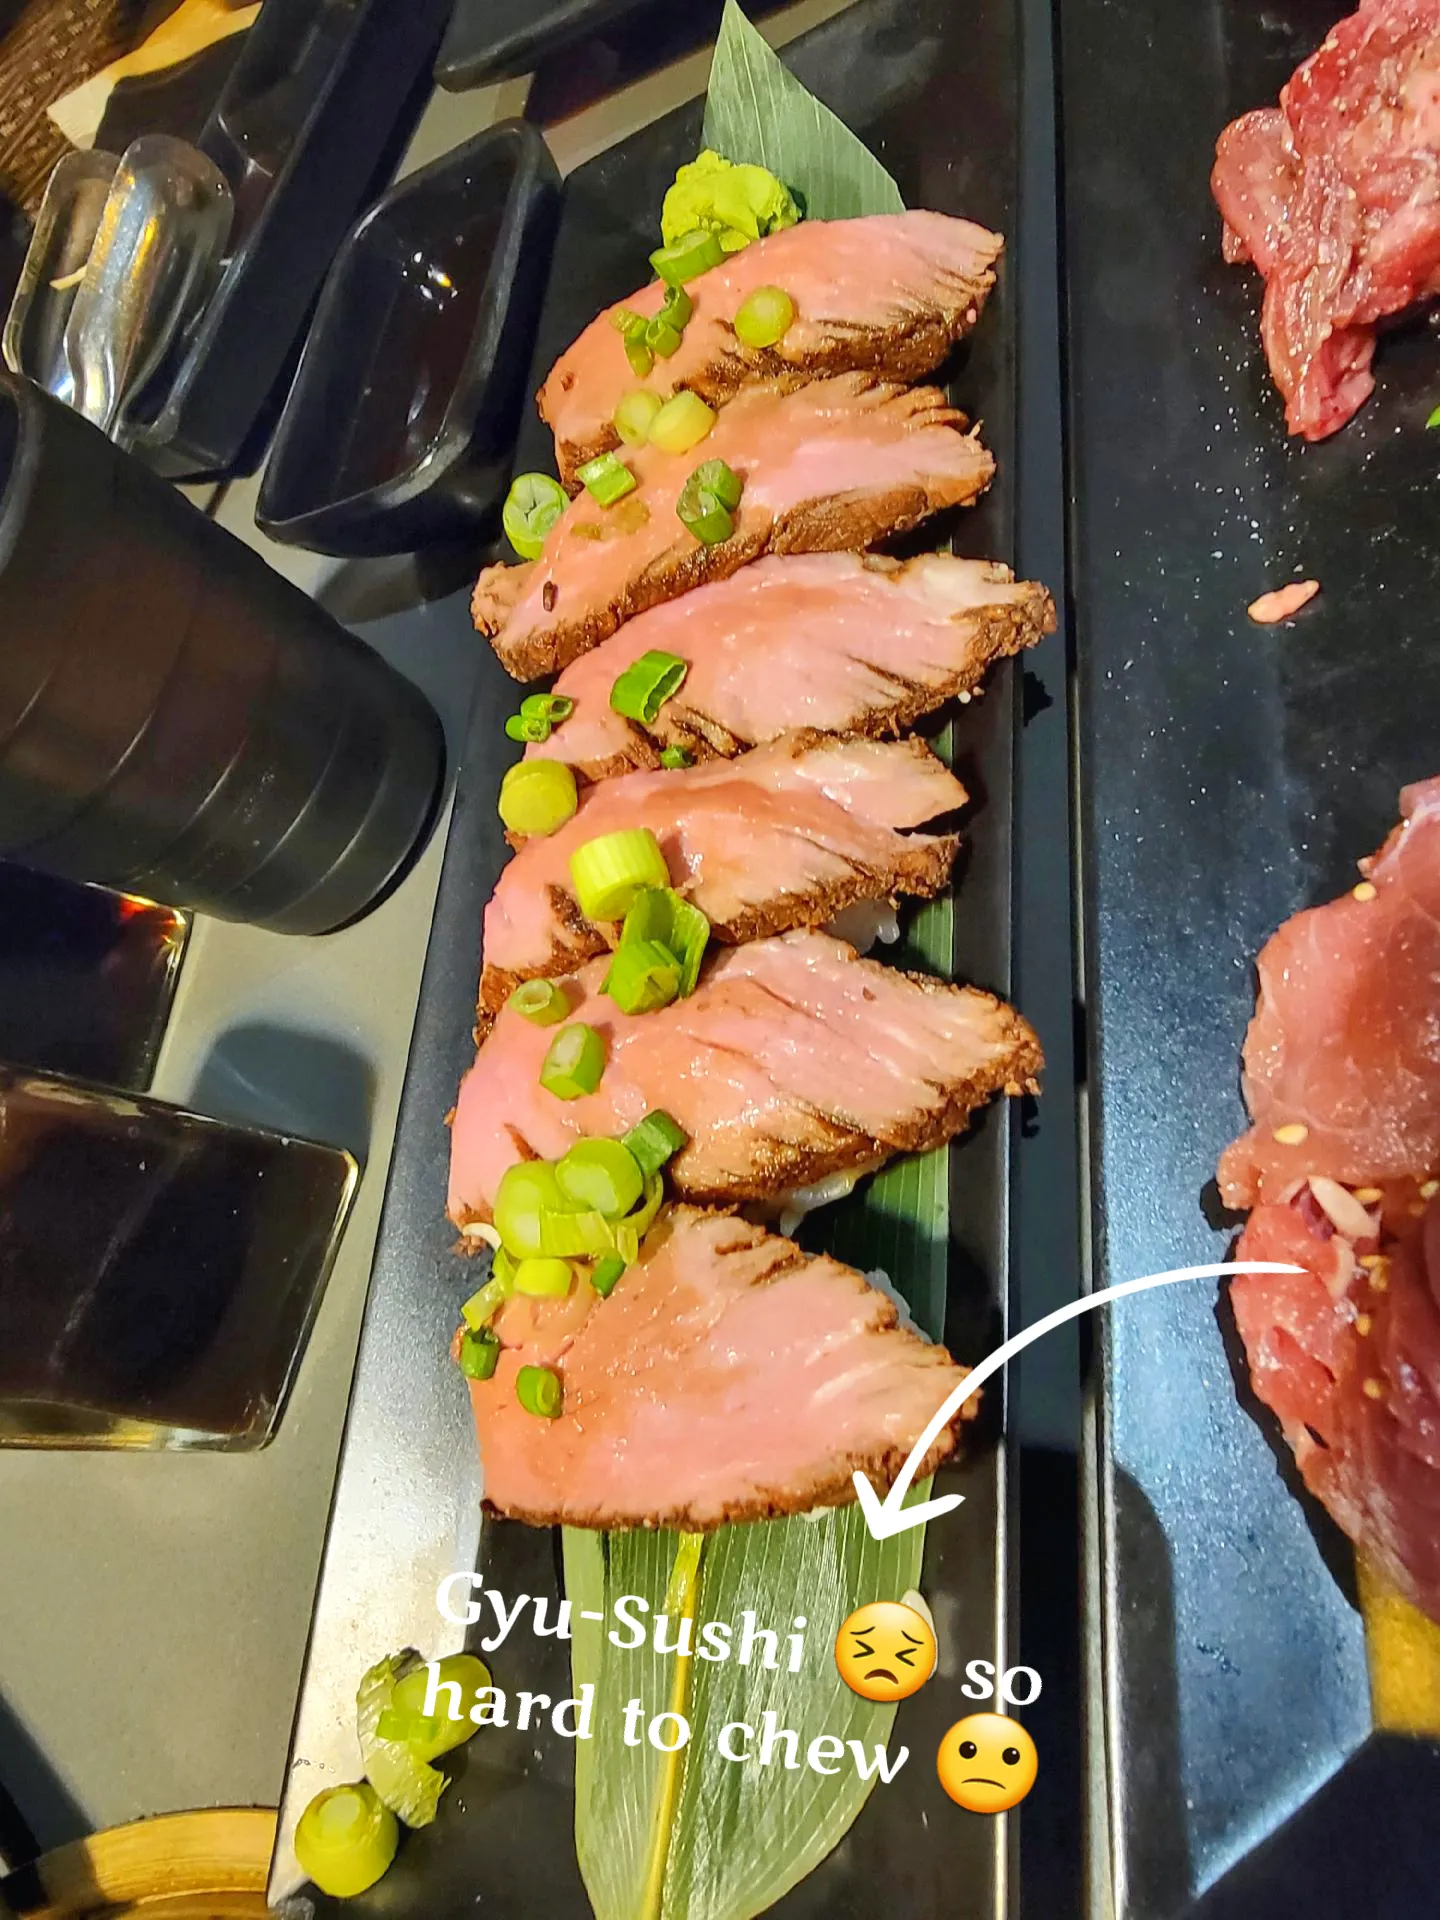 Gyu Kaku Japanese BBQ Toro Beef - Lemon8 Search